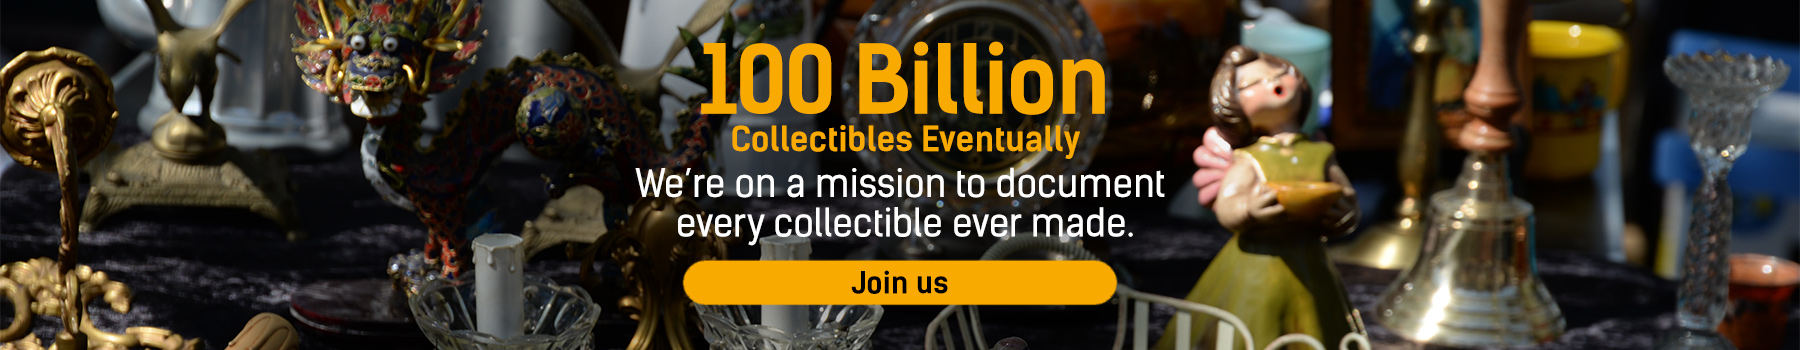 100 Billion Database Items Eventually